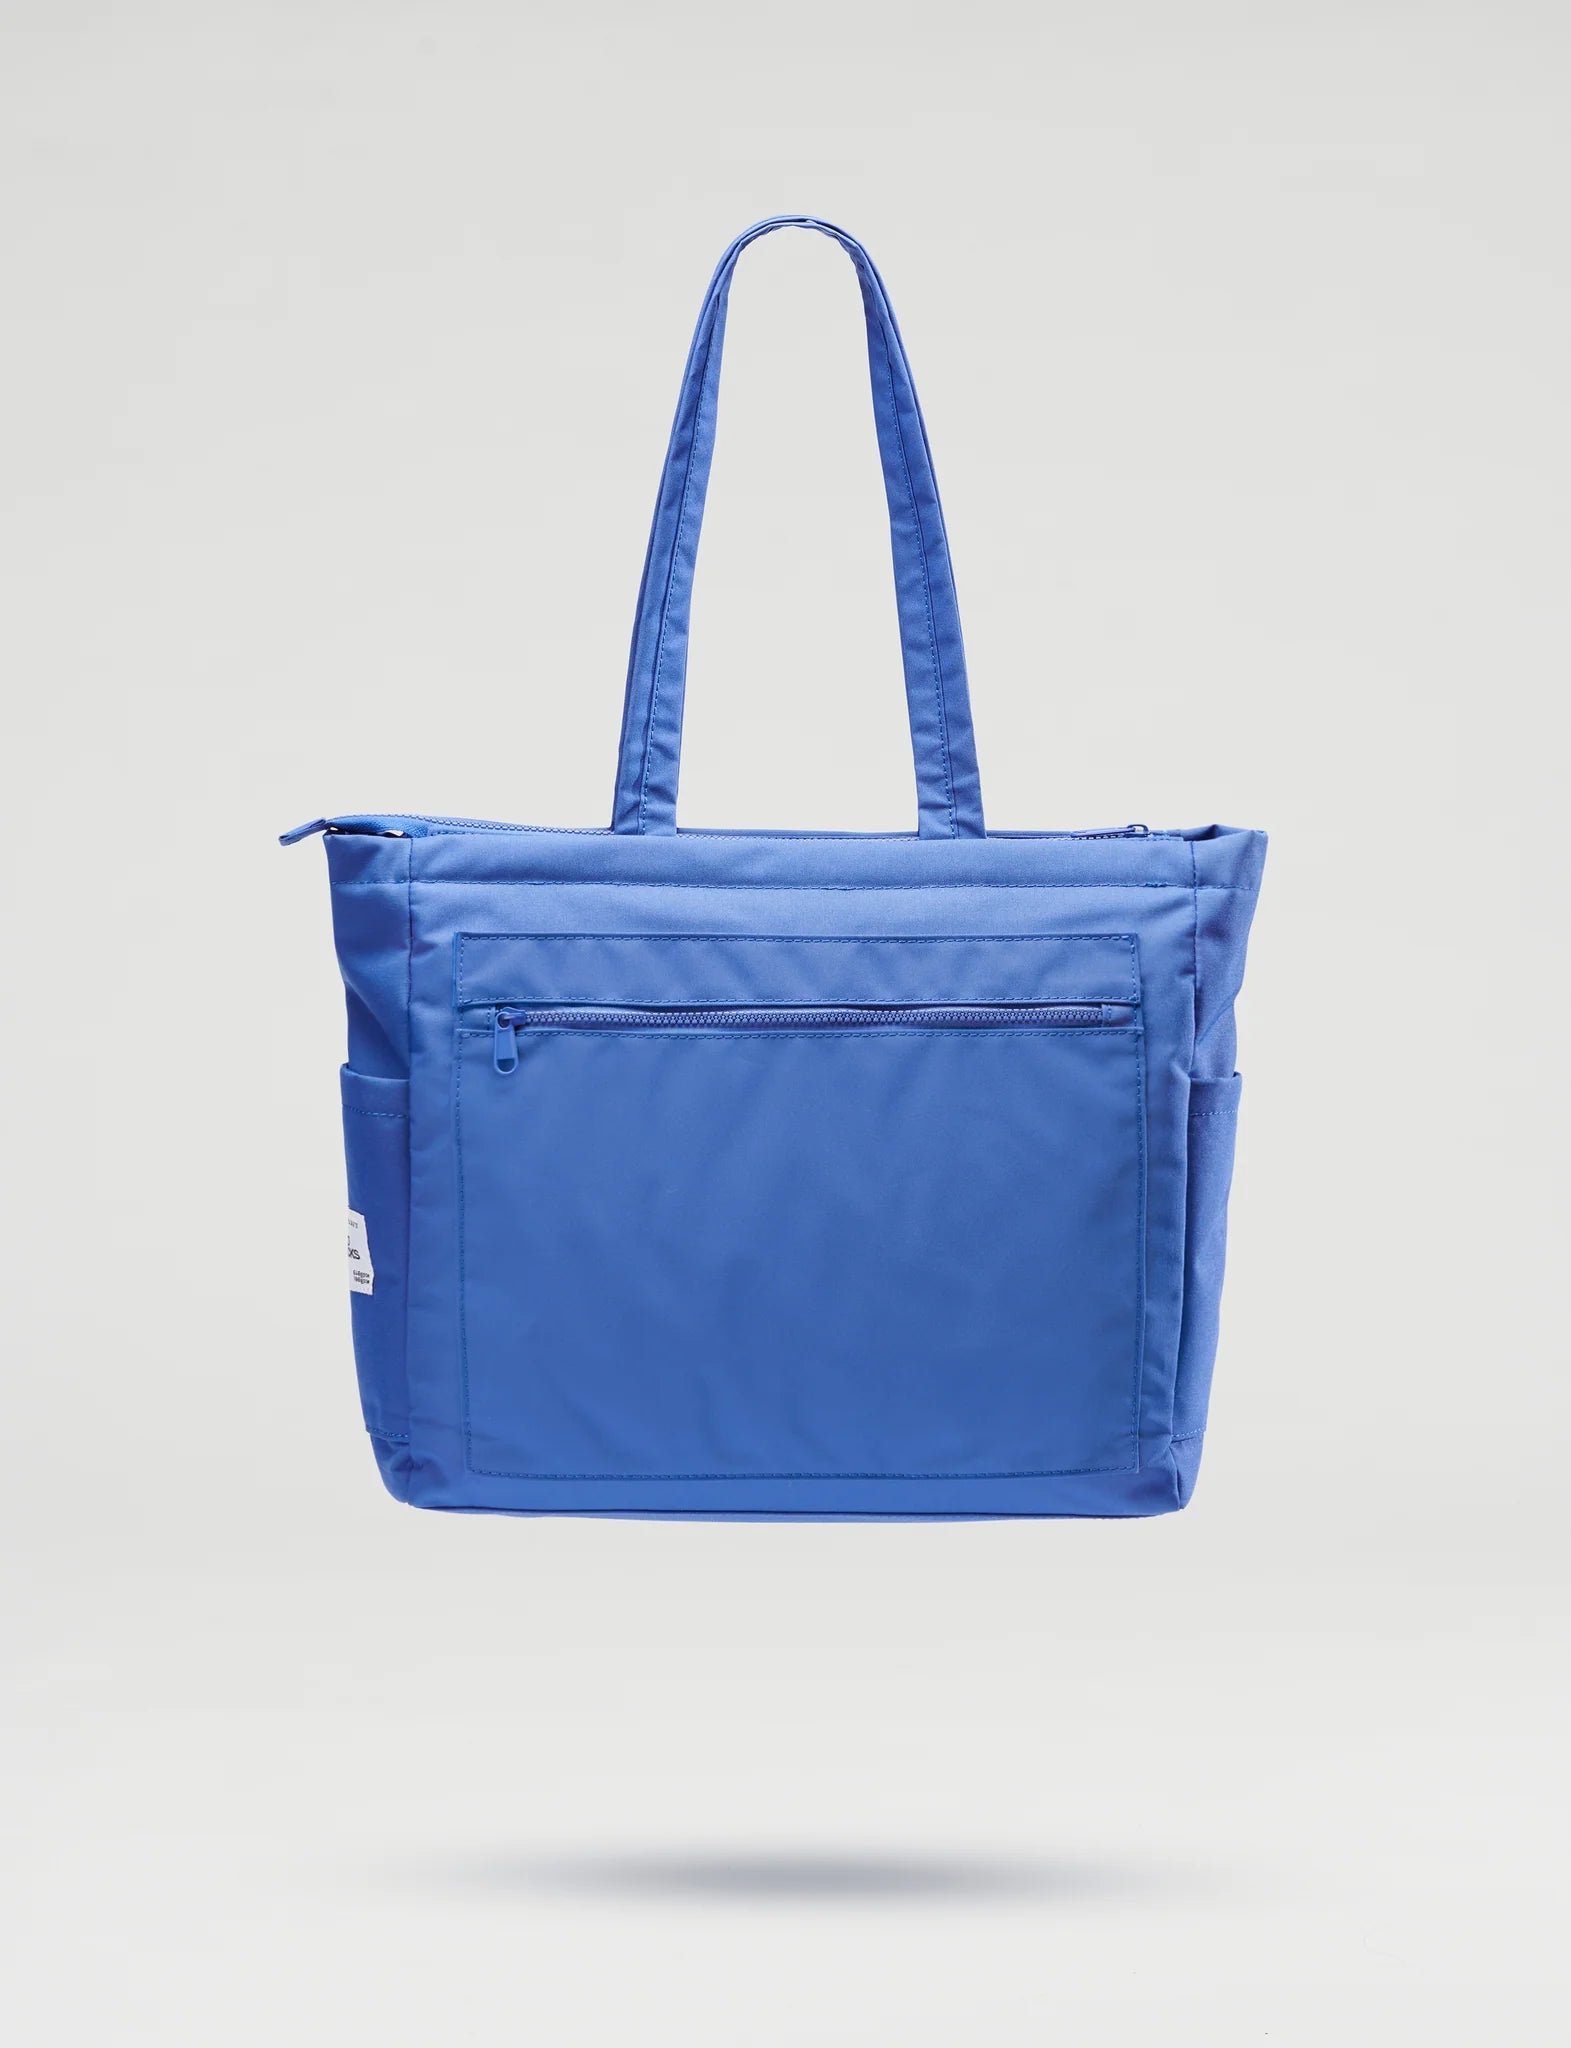 Ölend - Cosmico Tote Bag - Cobalt Blue